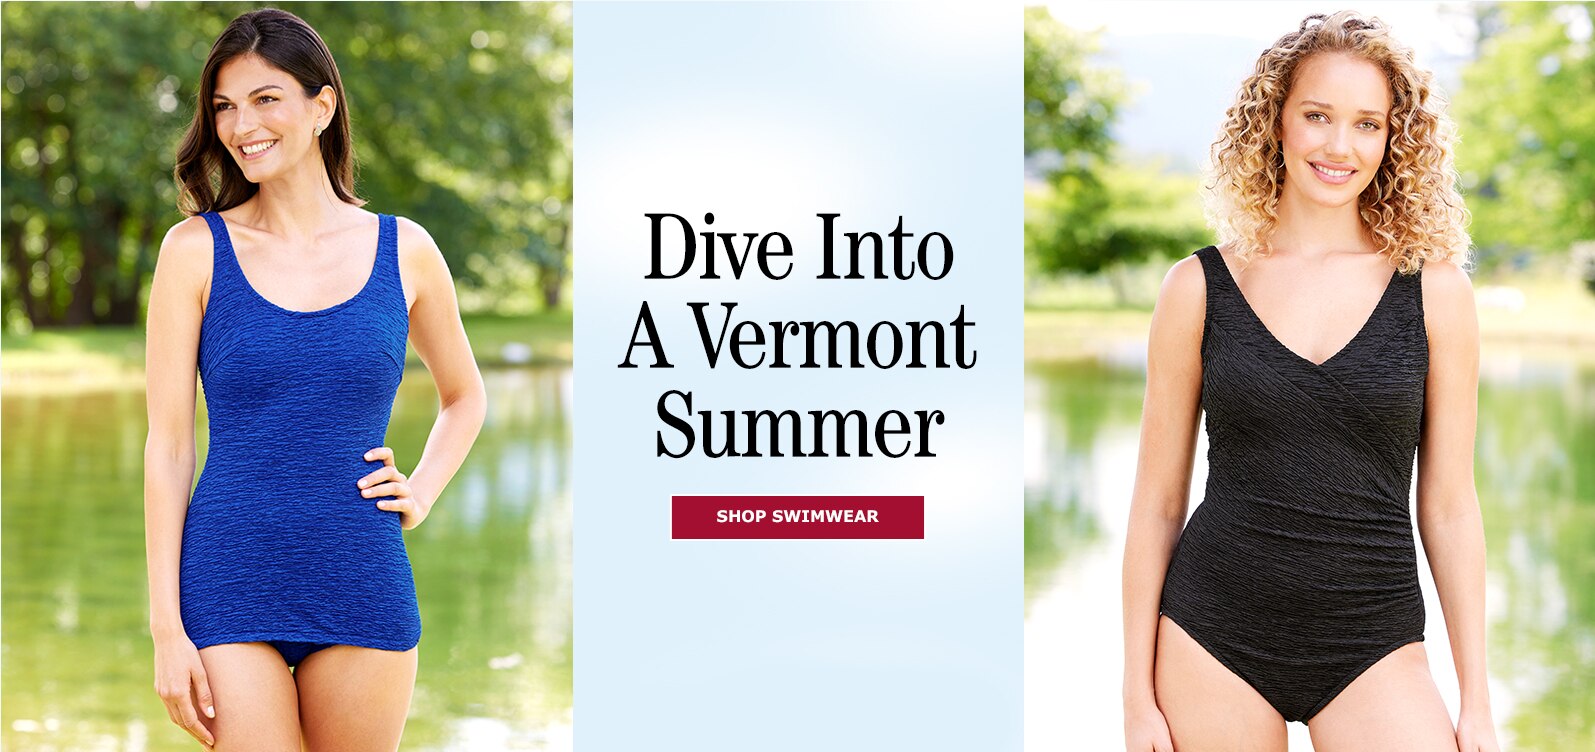 Dive Into a Vermont Summer. Shop Swimwear.